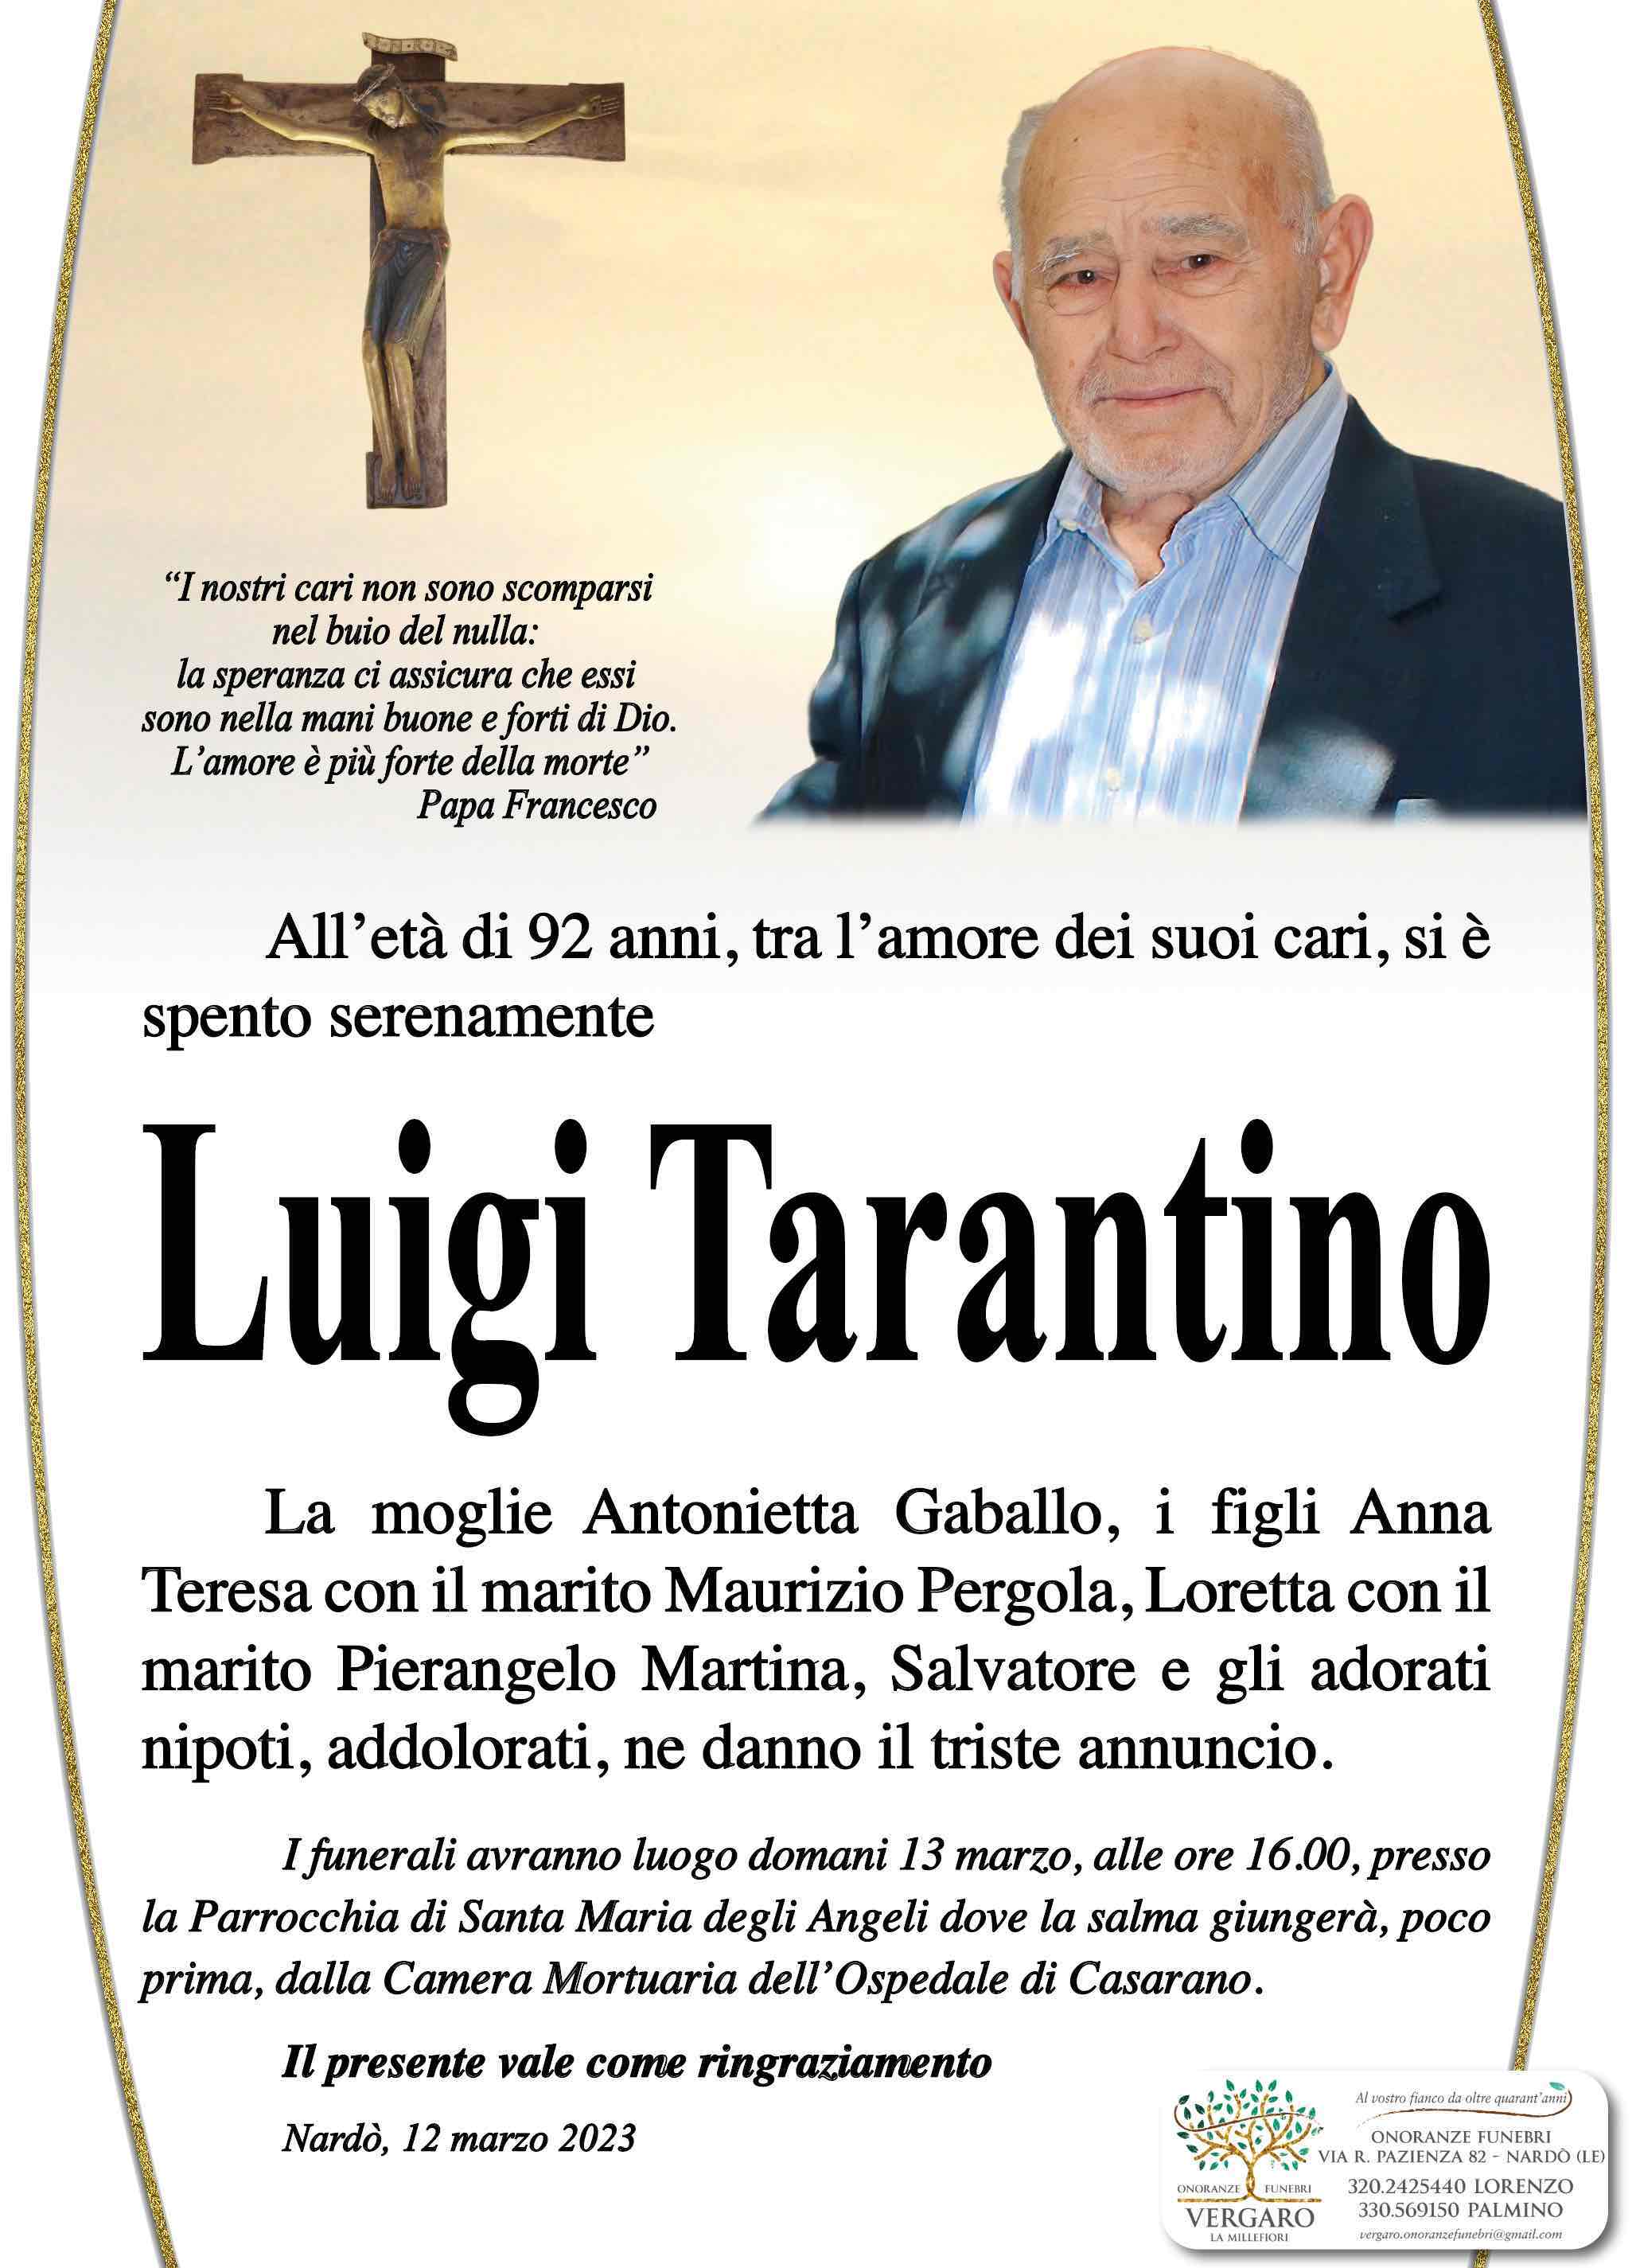 Luigi Tarantino